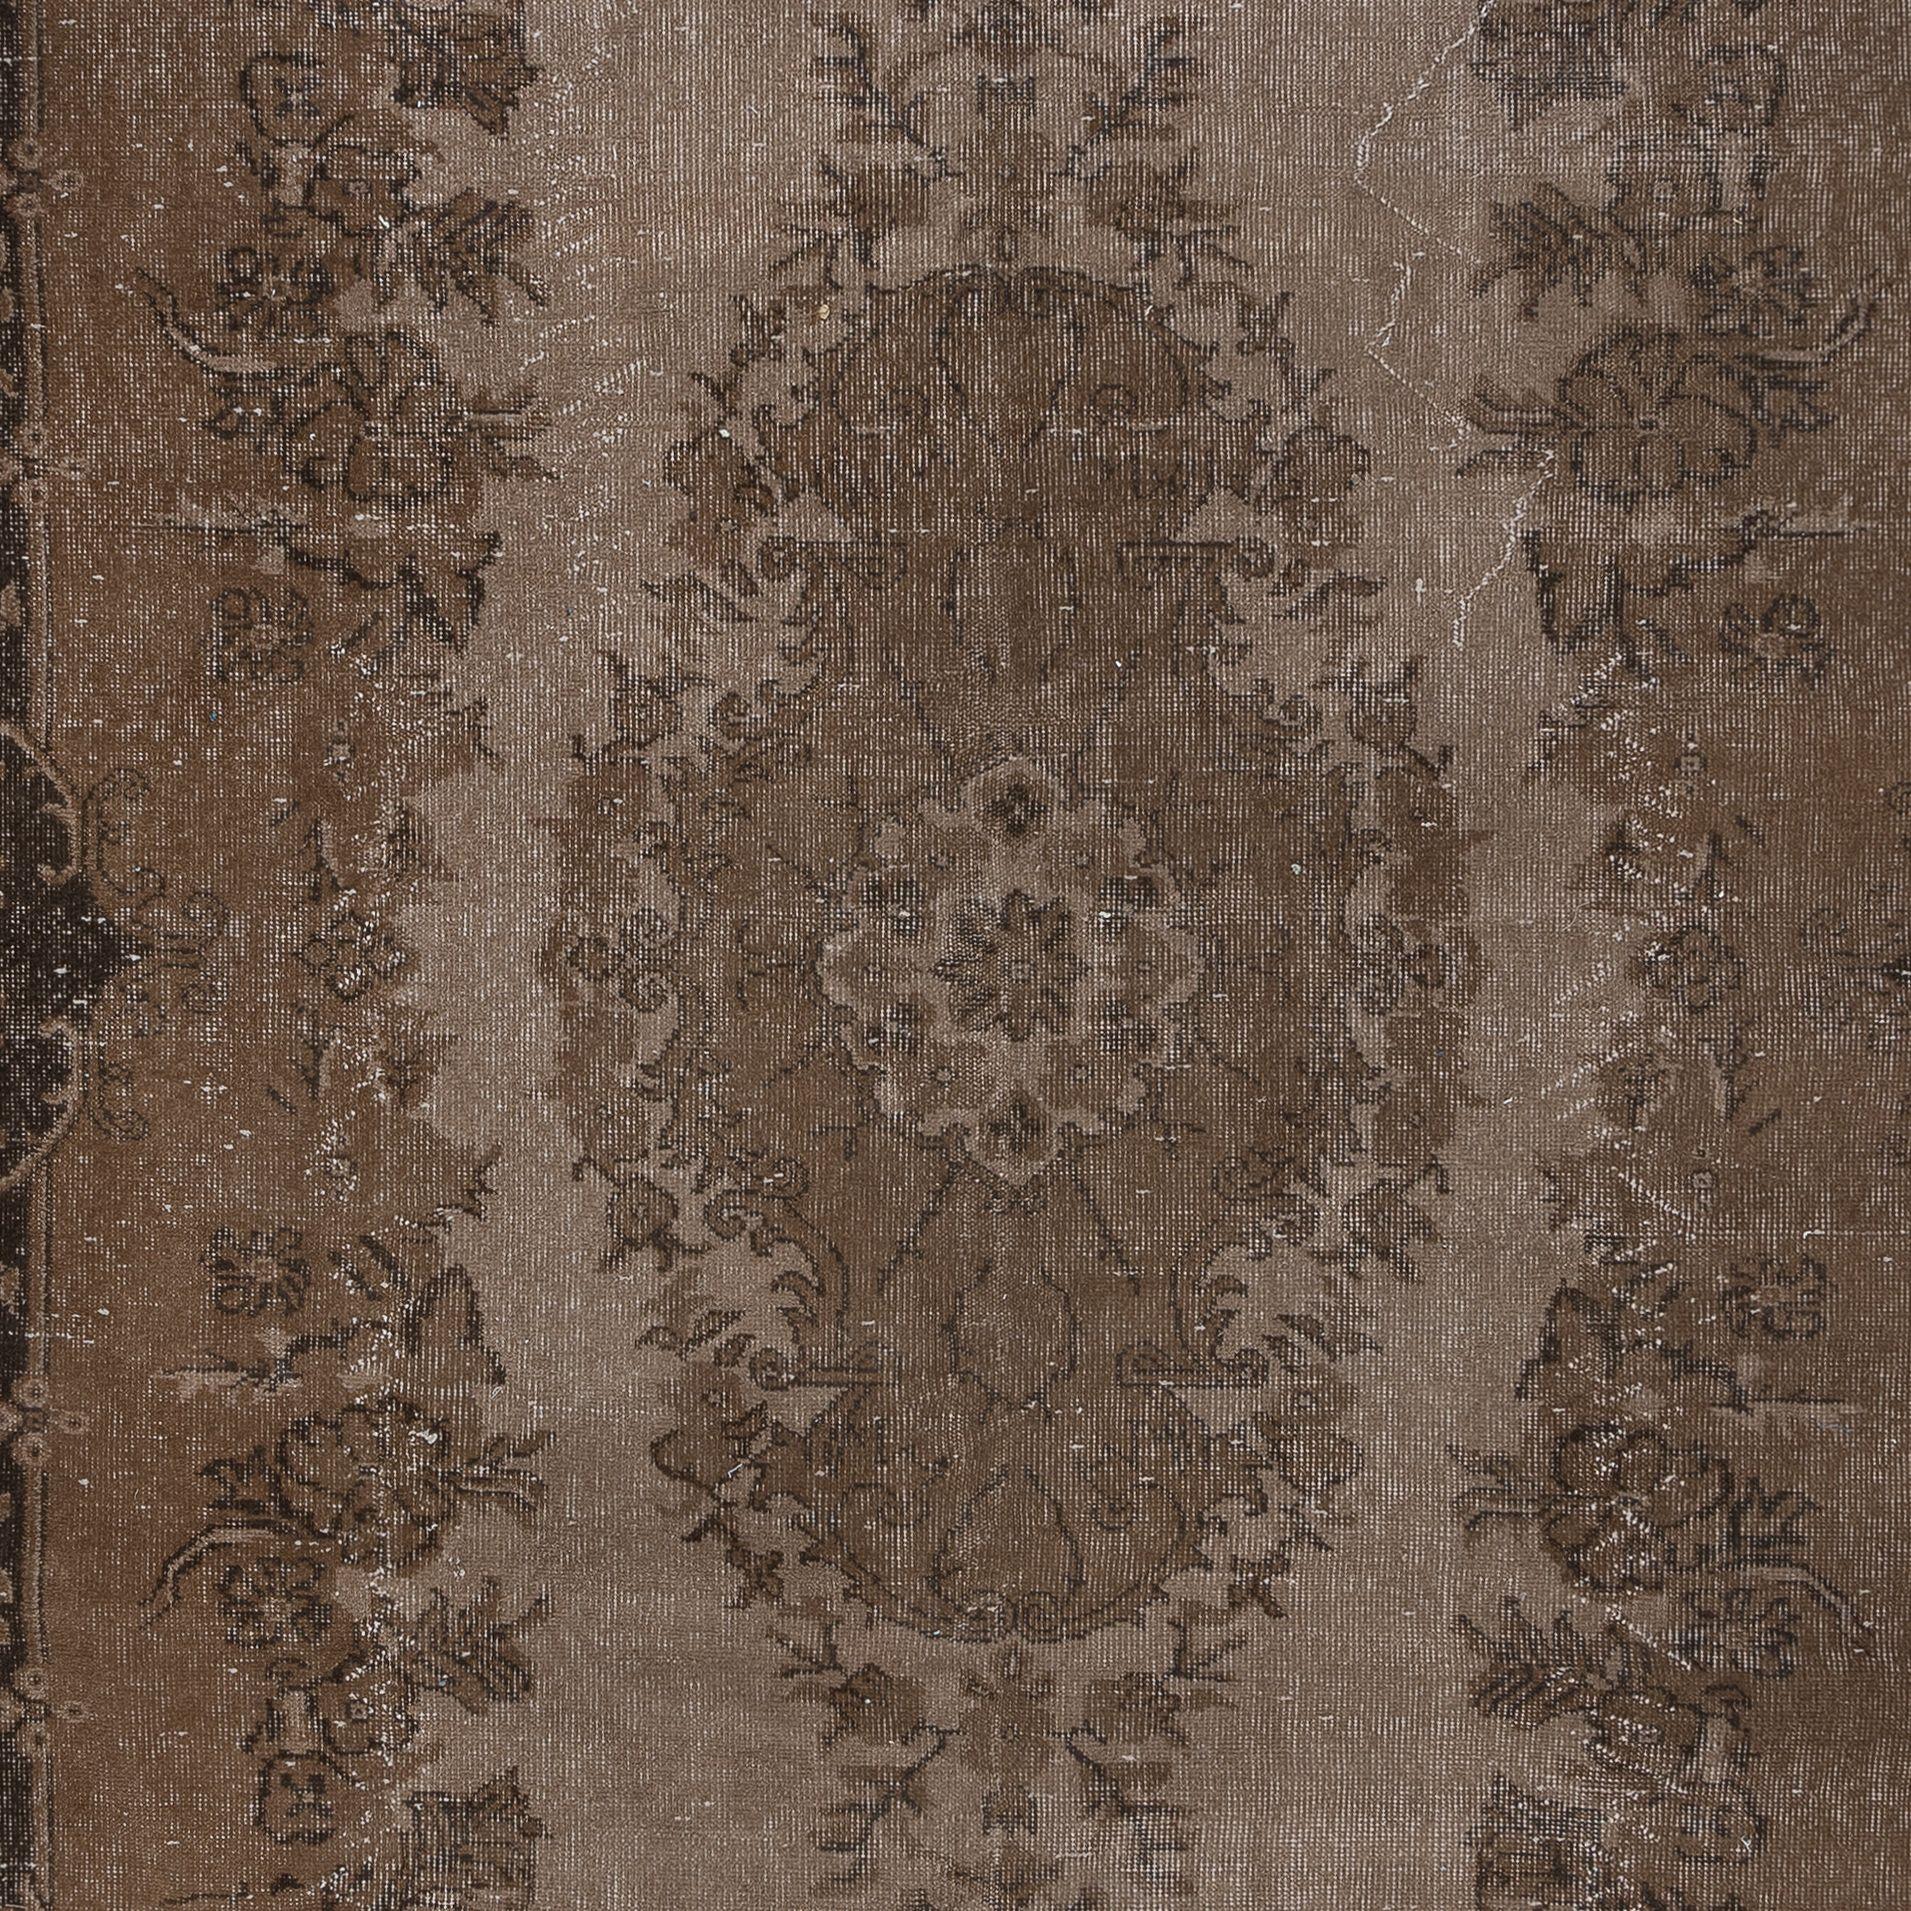 Hand-Woven 6x9.8 Ft Handmade Turkish Rug, Brown Medallion Design Carpet for Living Room For Sale